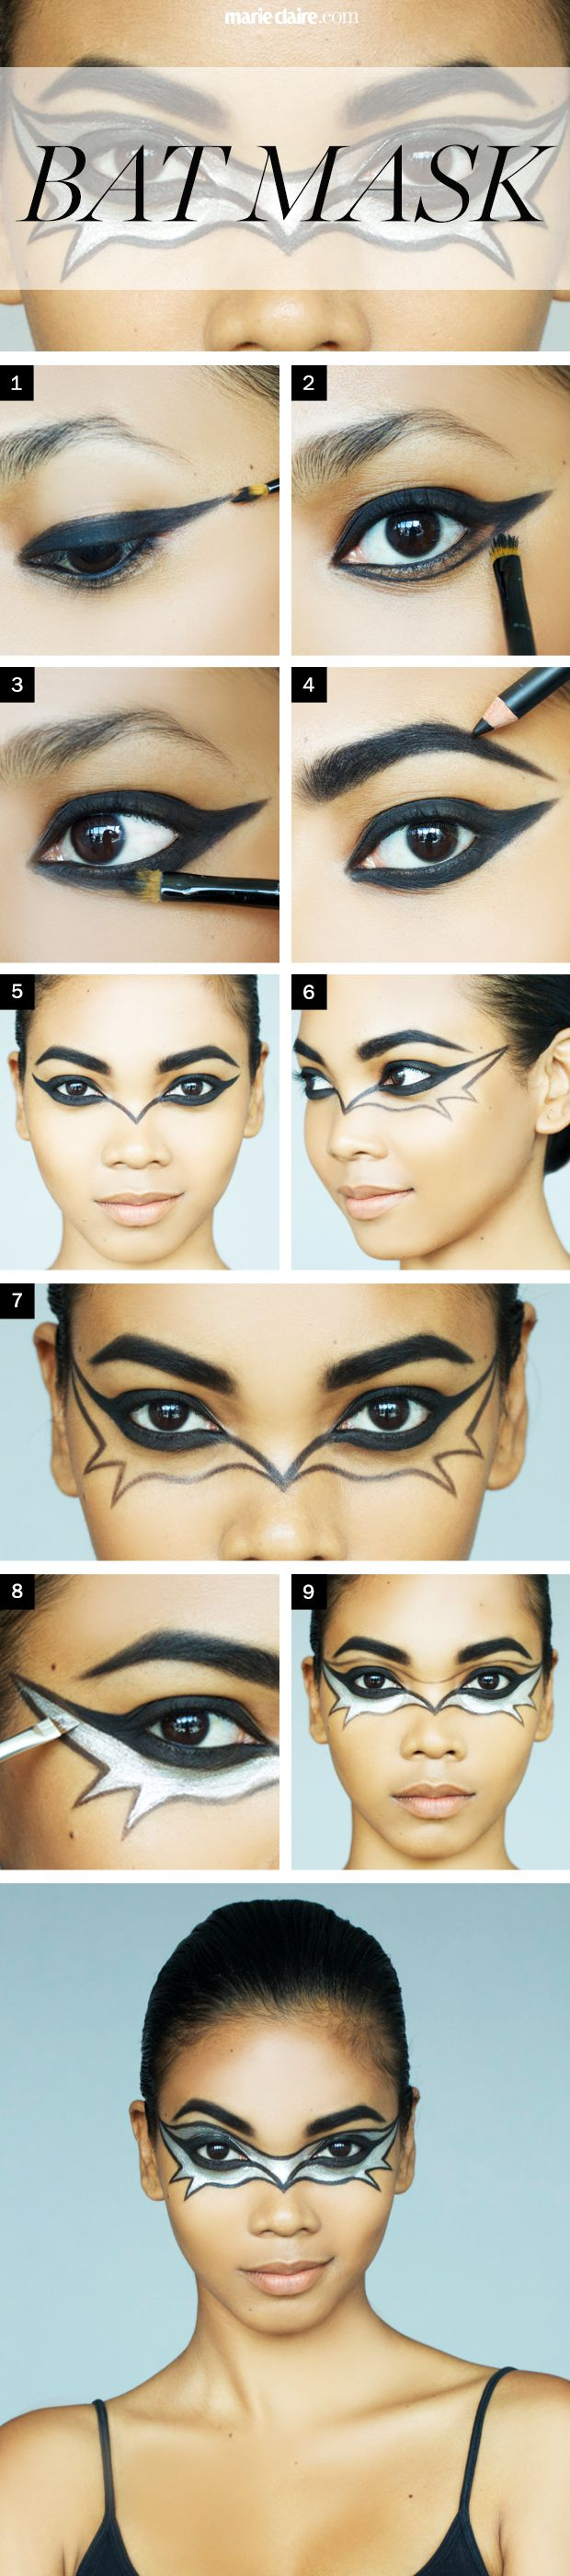 Eye Makeup Under Mask Halloween Makeup How To The Bat Mask